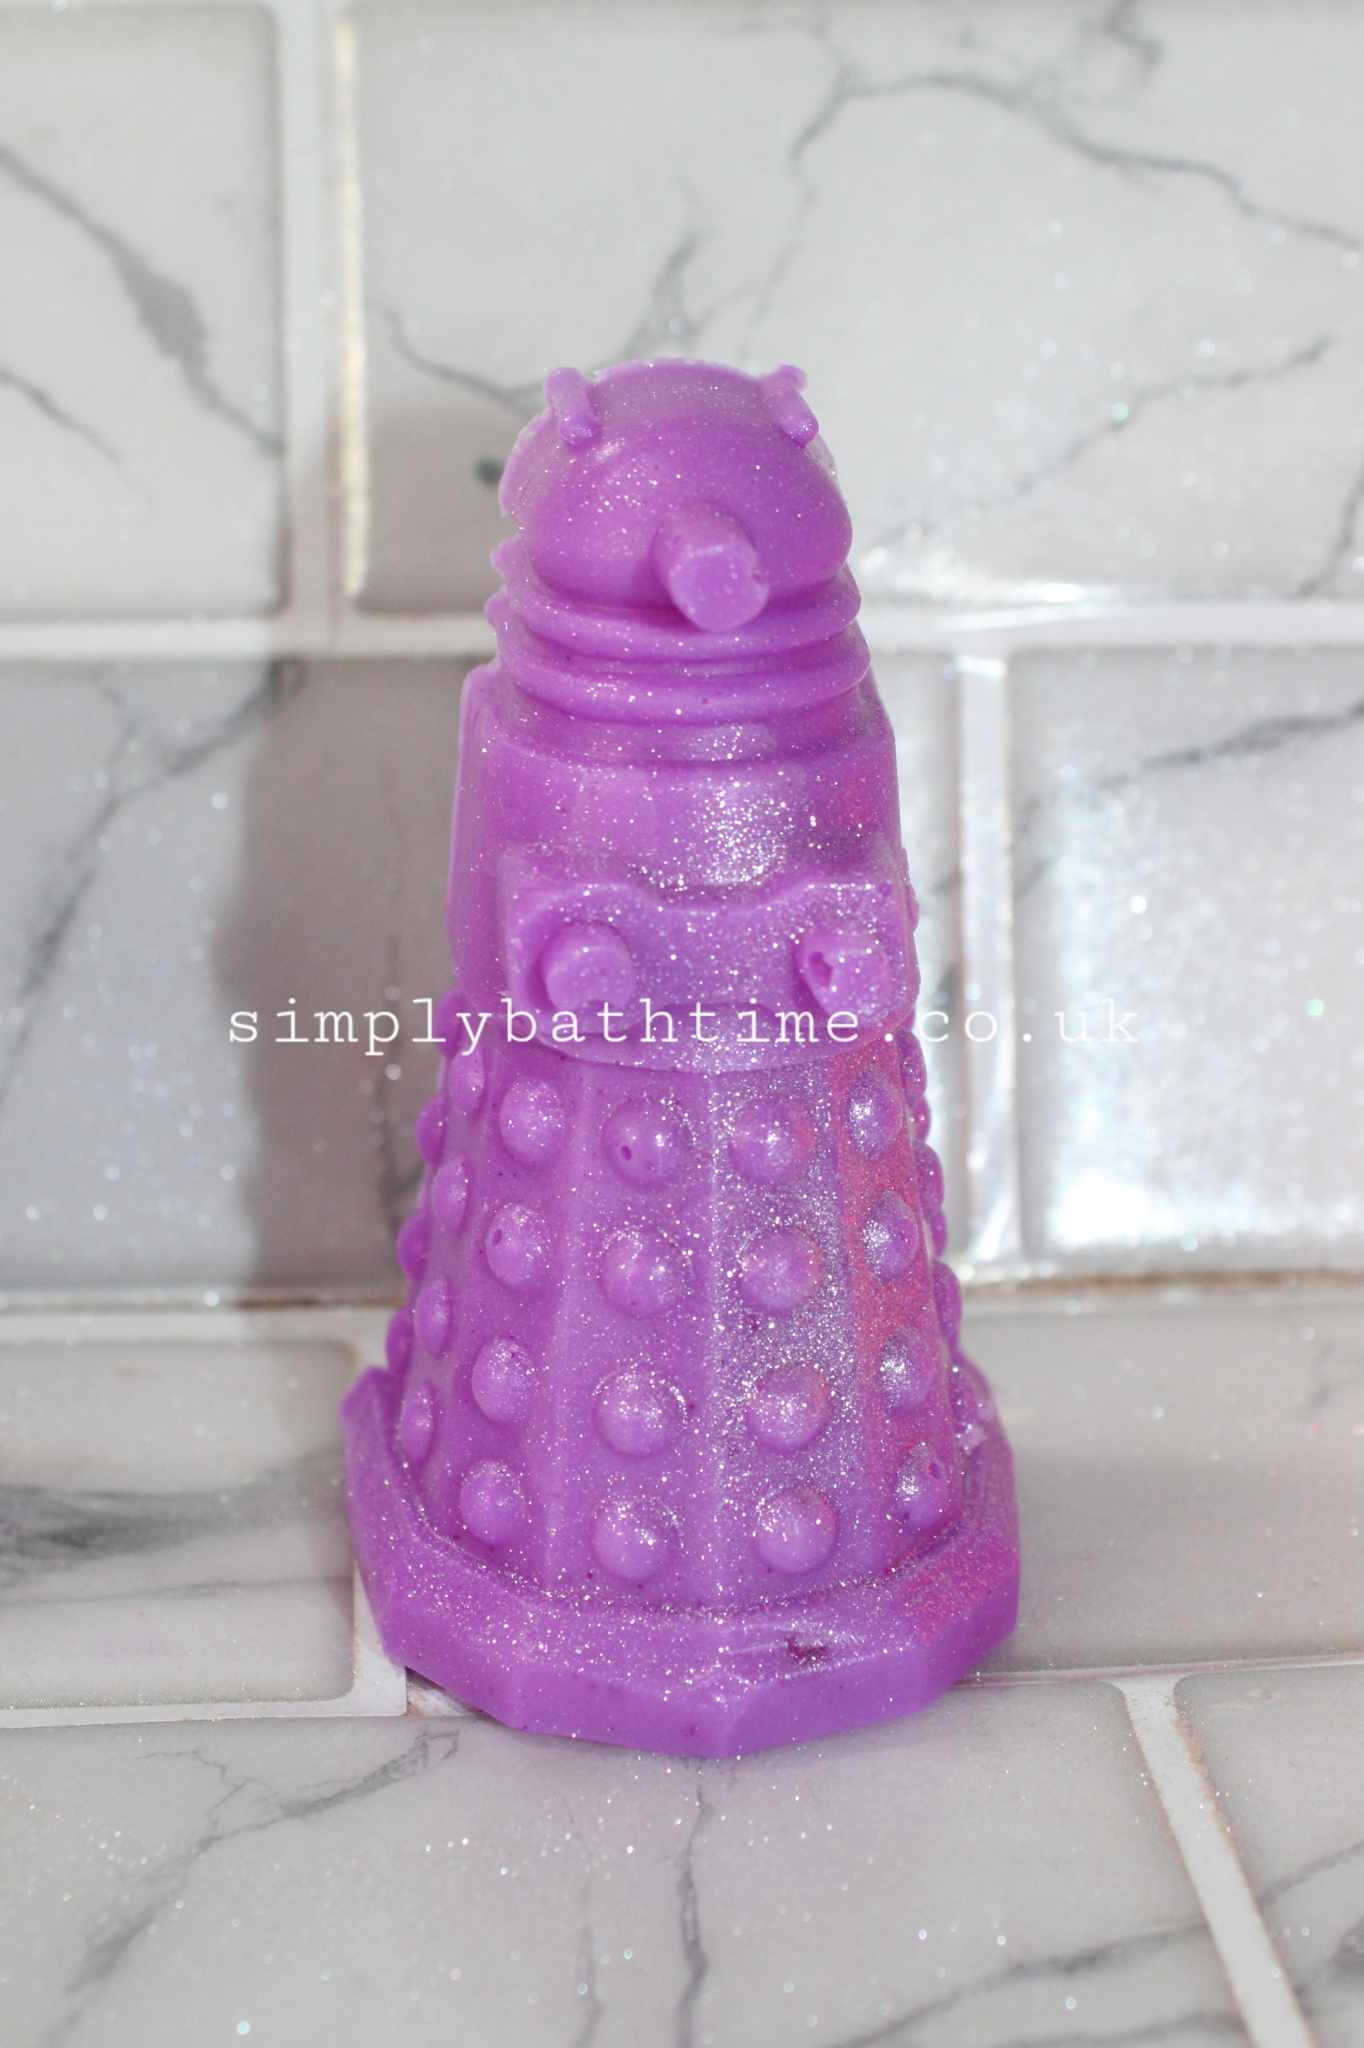 3D Dalek Soap